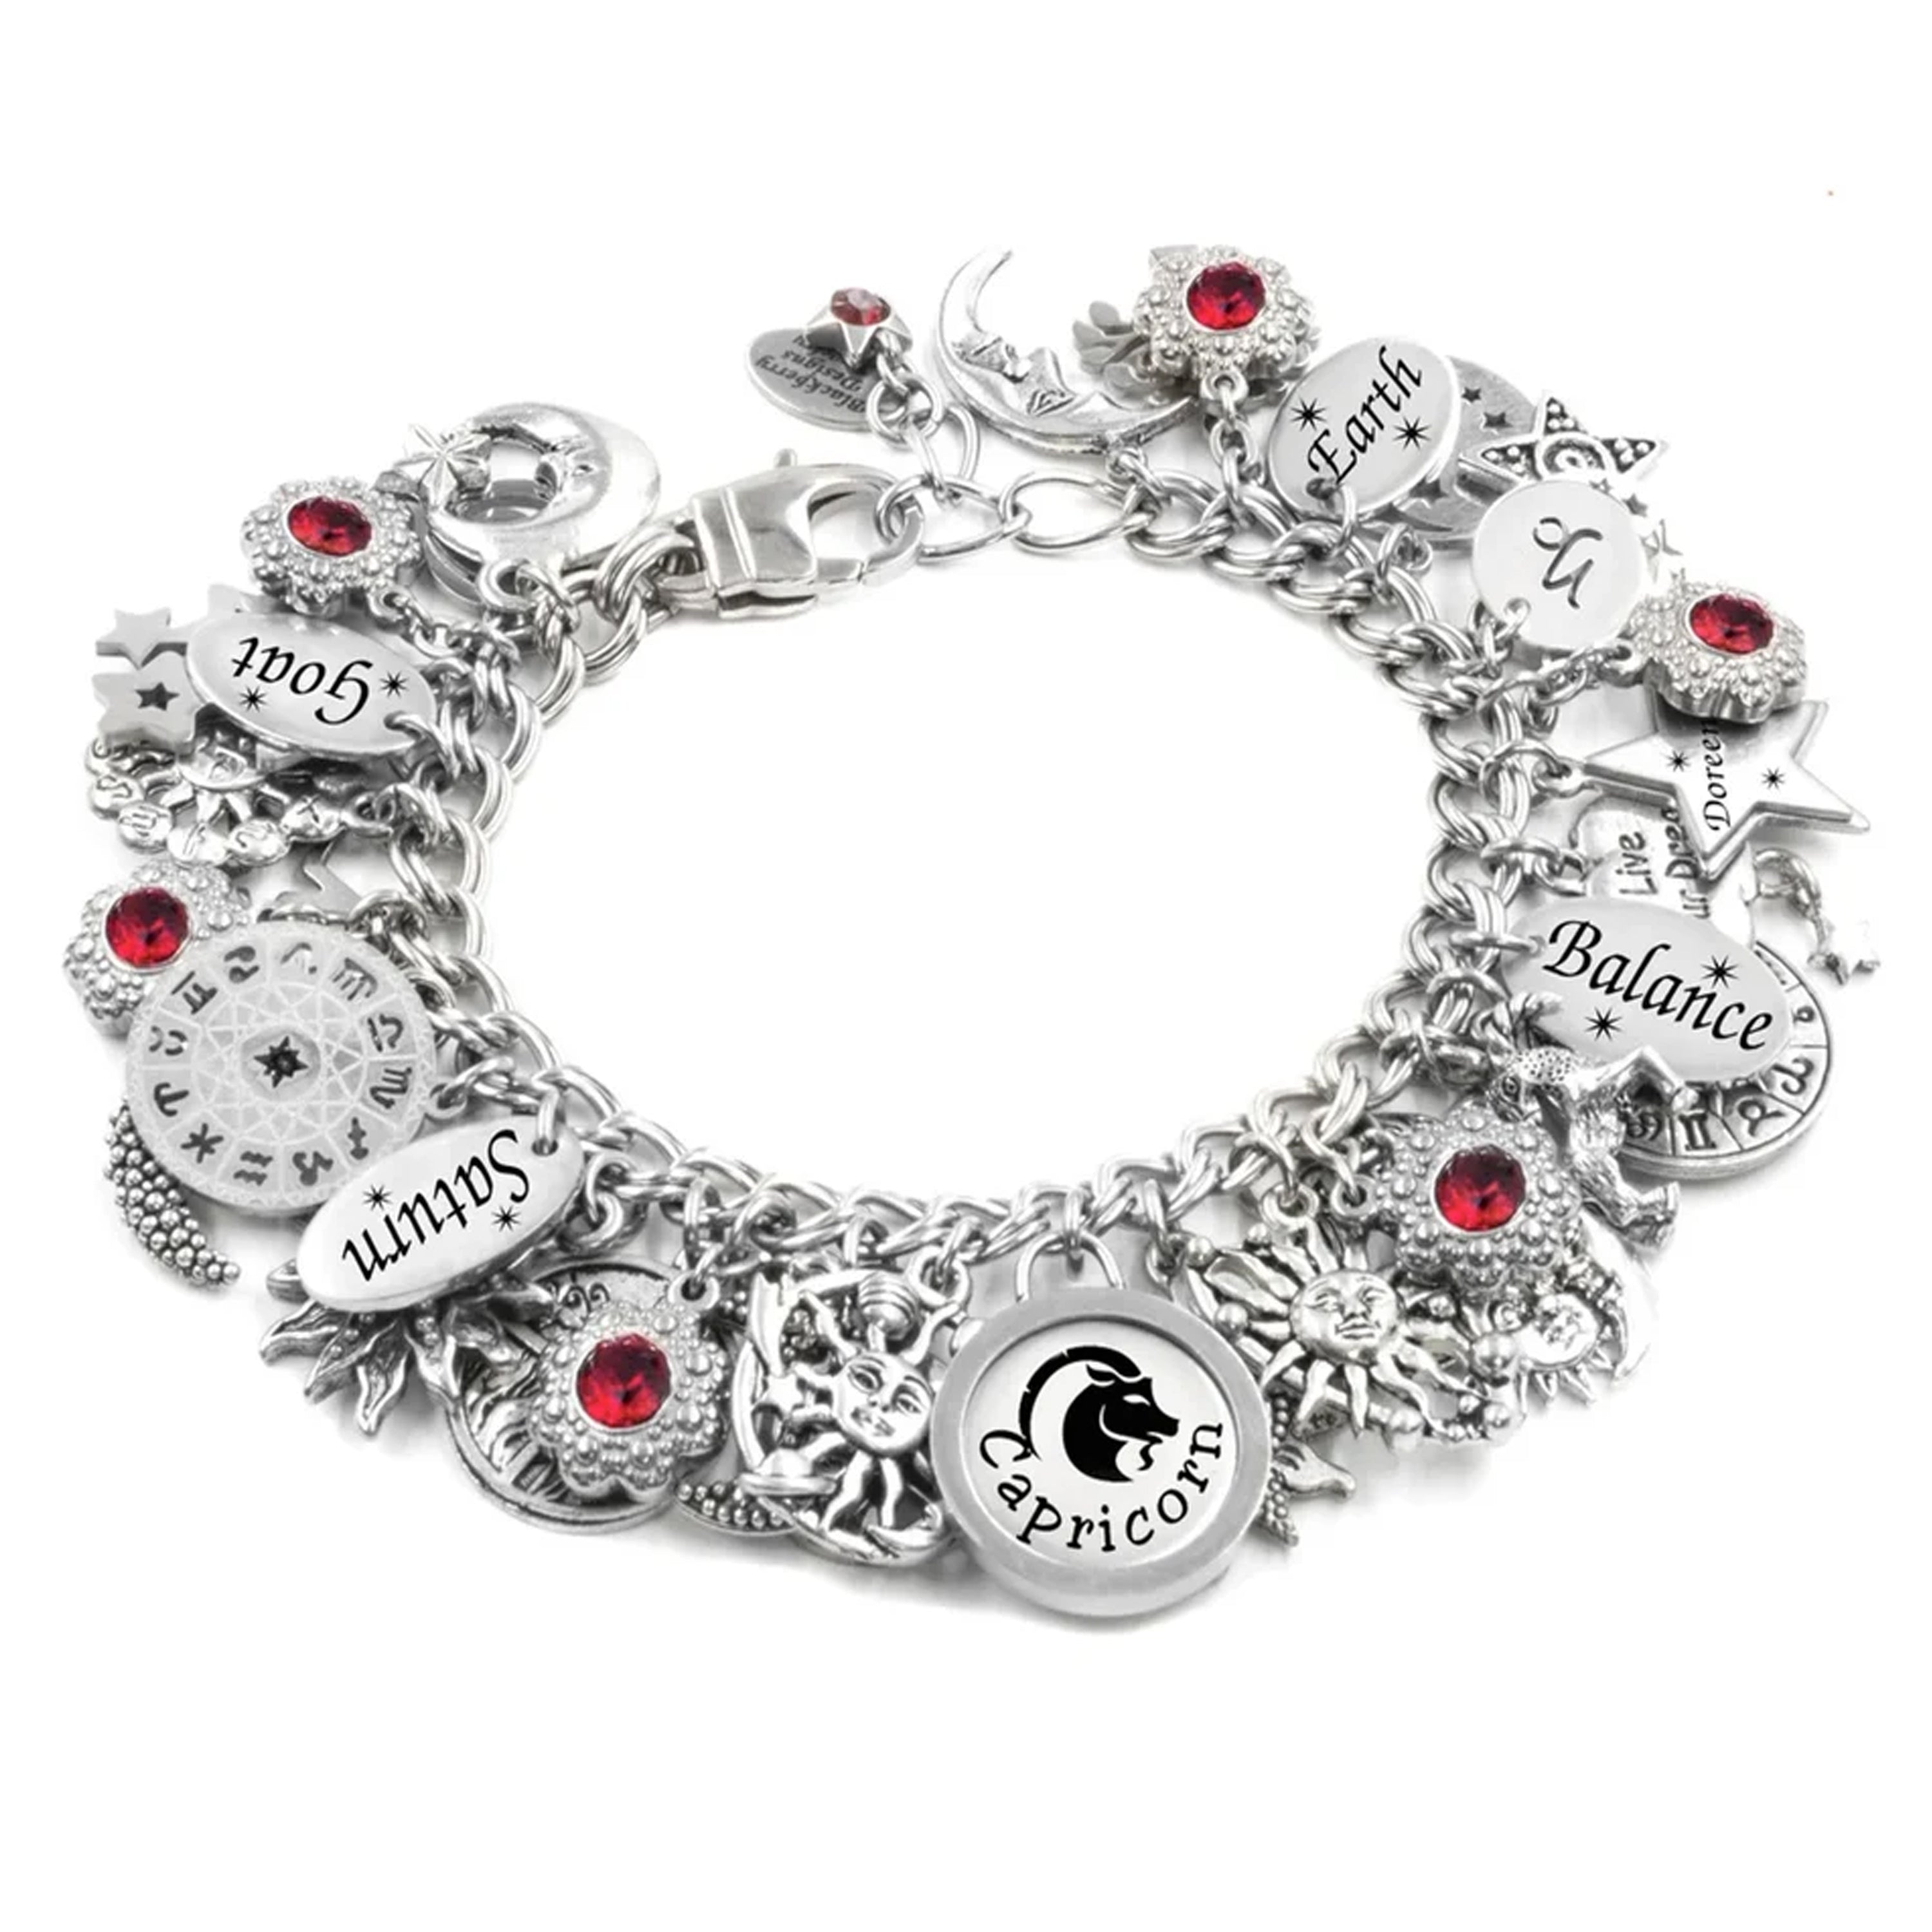  Lucky 7 cord bracelet, lucky 7 charm bracelet, adjustable  bracelet, charm bracelet, personalized bracelet, initial bracelet, monogram  : Handmade Products